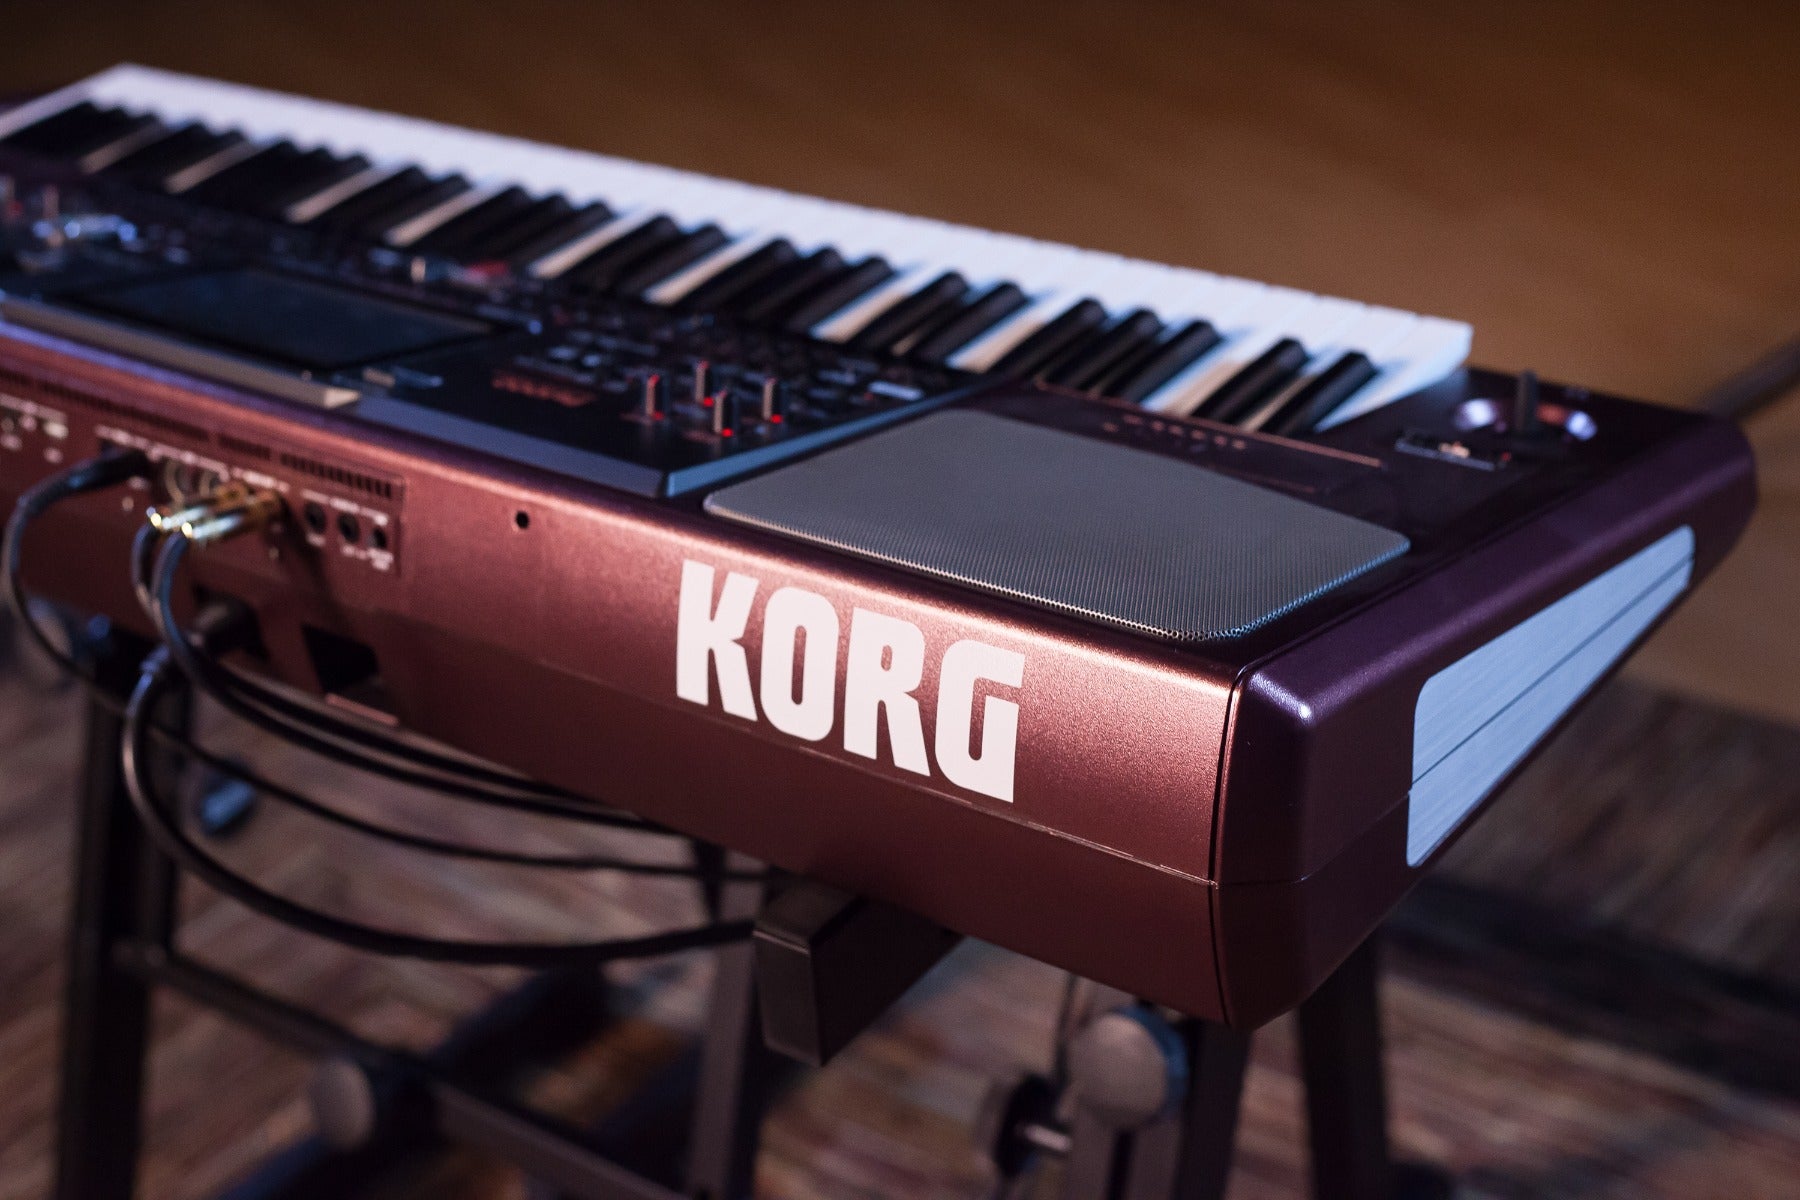 Korg Pa1000 Professional Arranger Keyboard